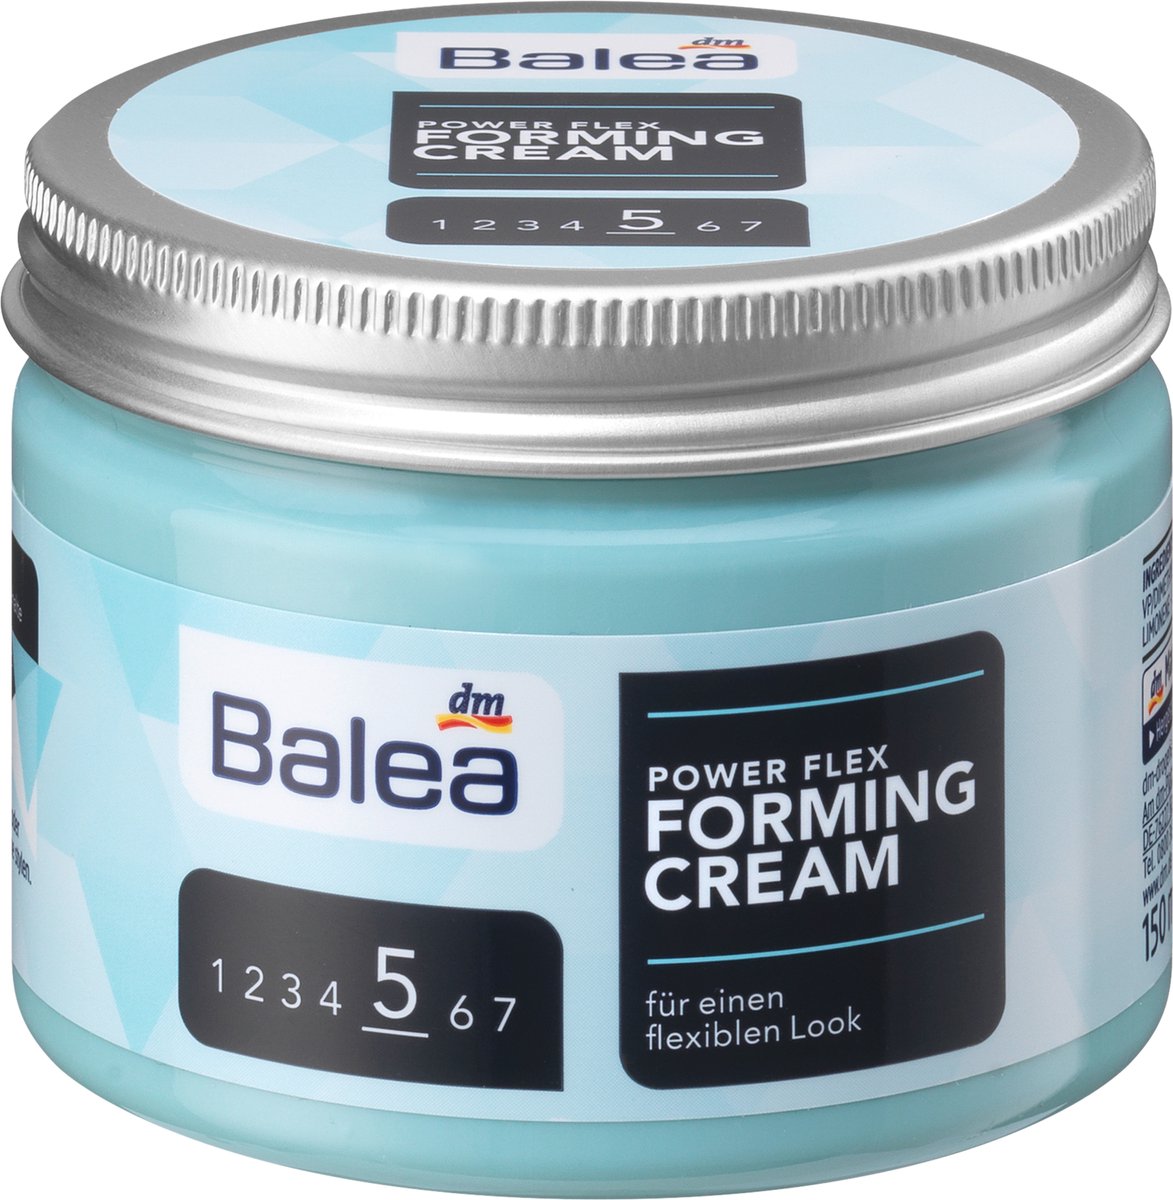 Balea Forming Cream Power Flex, 150 ml